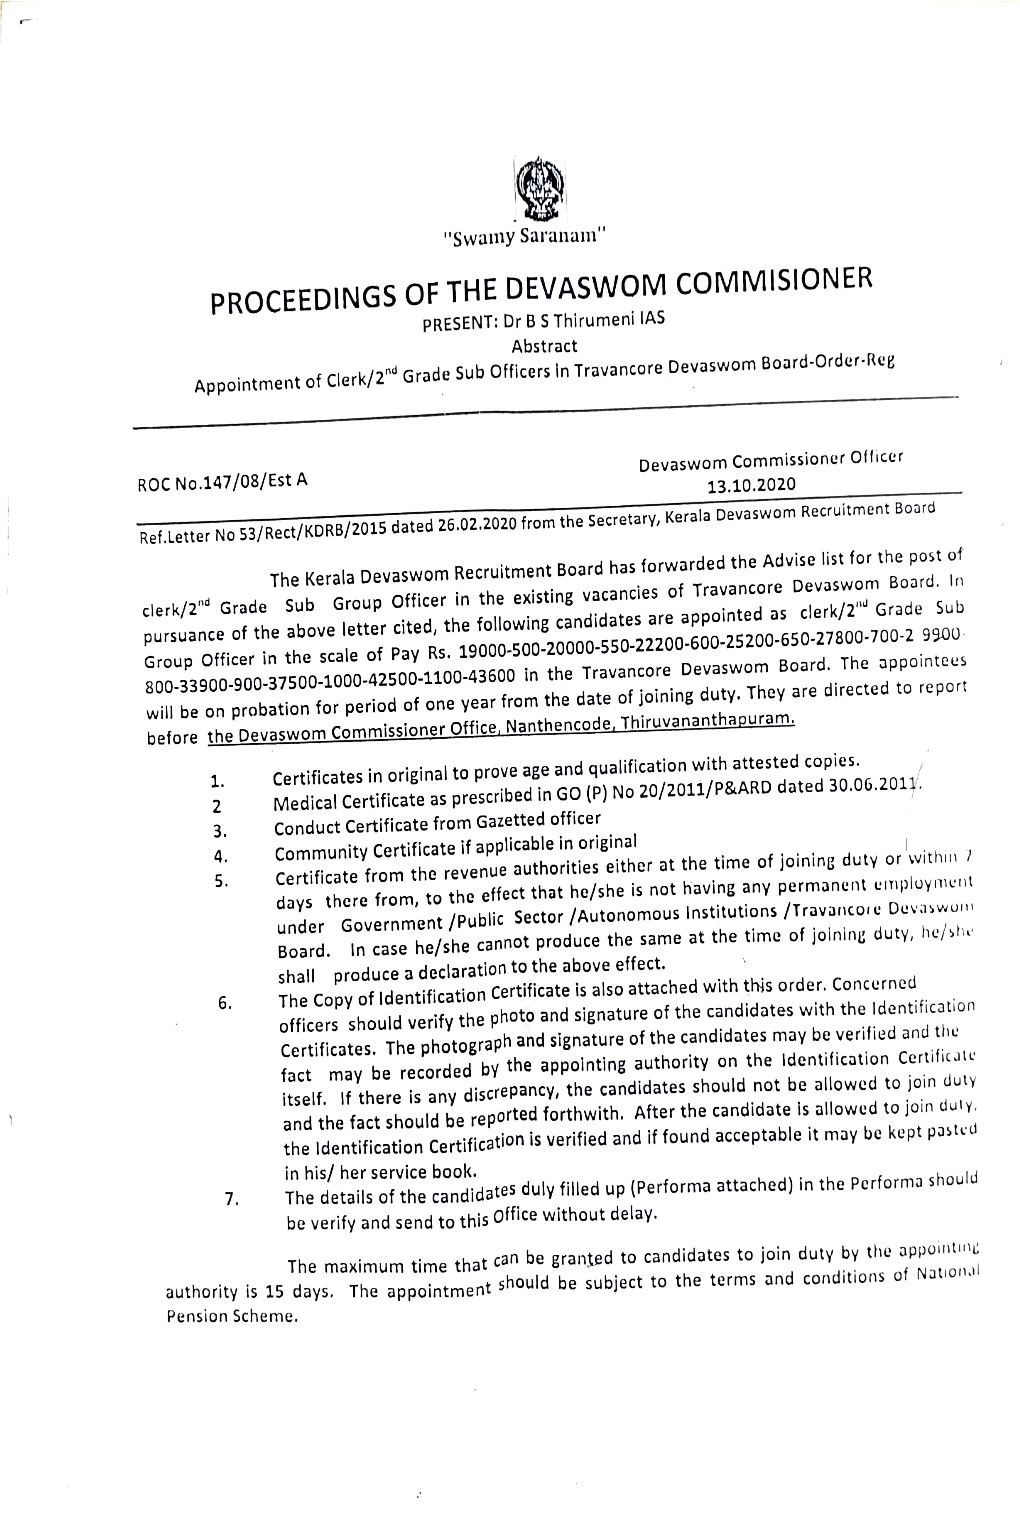 PRESENT: Dr BS Thirumeni Las Abstract Devaswom Board-Order-Reg Grade Sub Officers in Travancore Appointment of Clerk/2